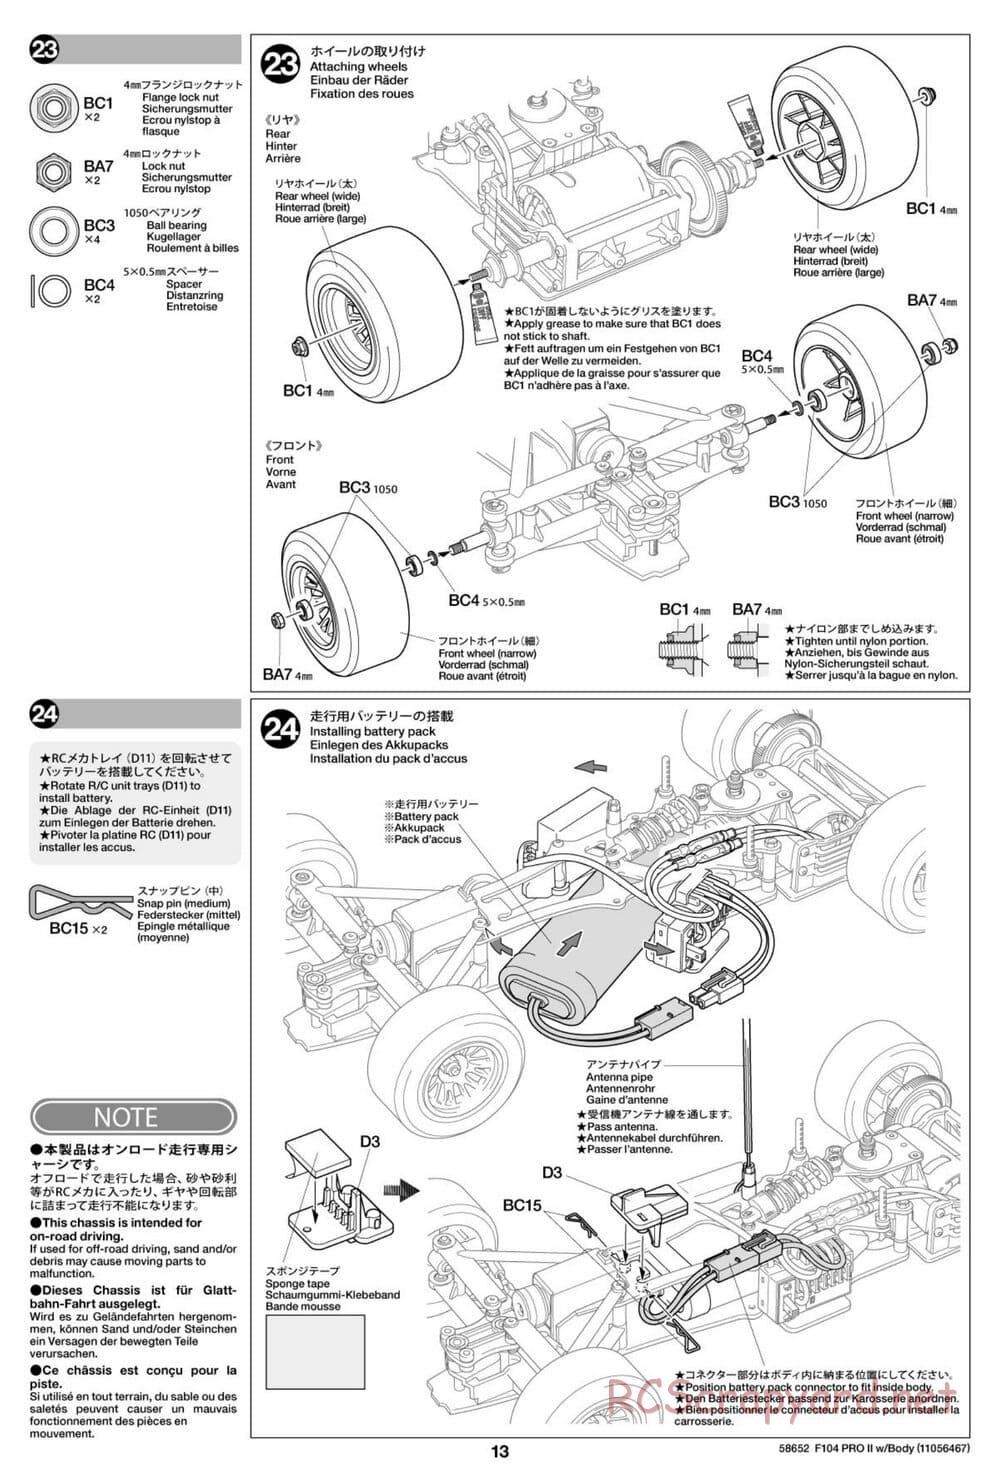 Tamiya - F104 Pro II Chassis - Manual - Page 13